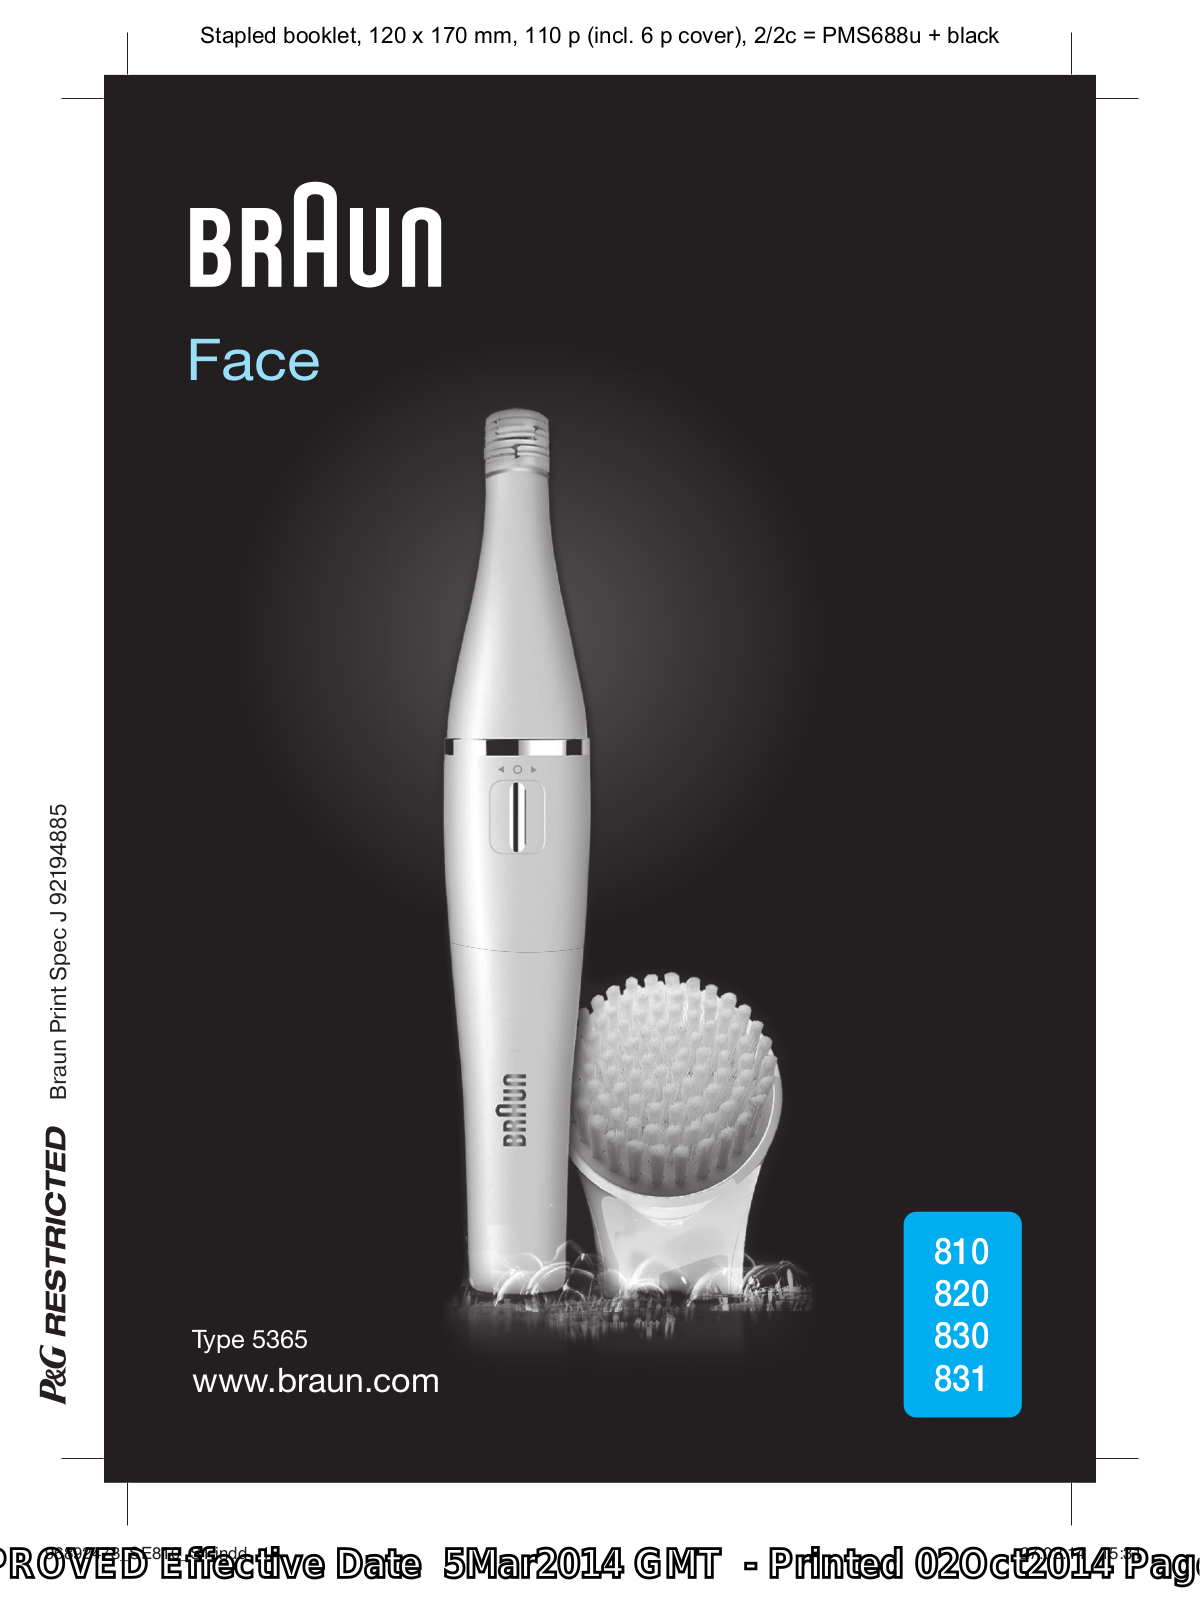 Braun 831, 820, 830, 810 User Manual